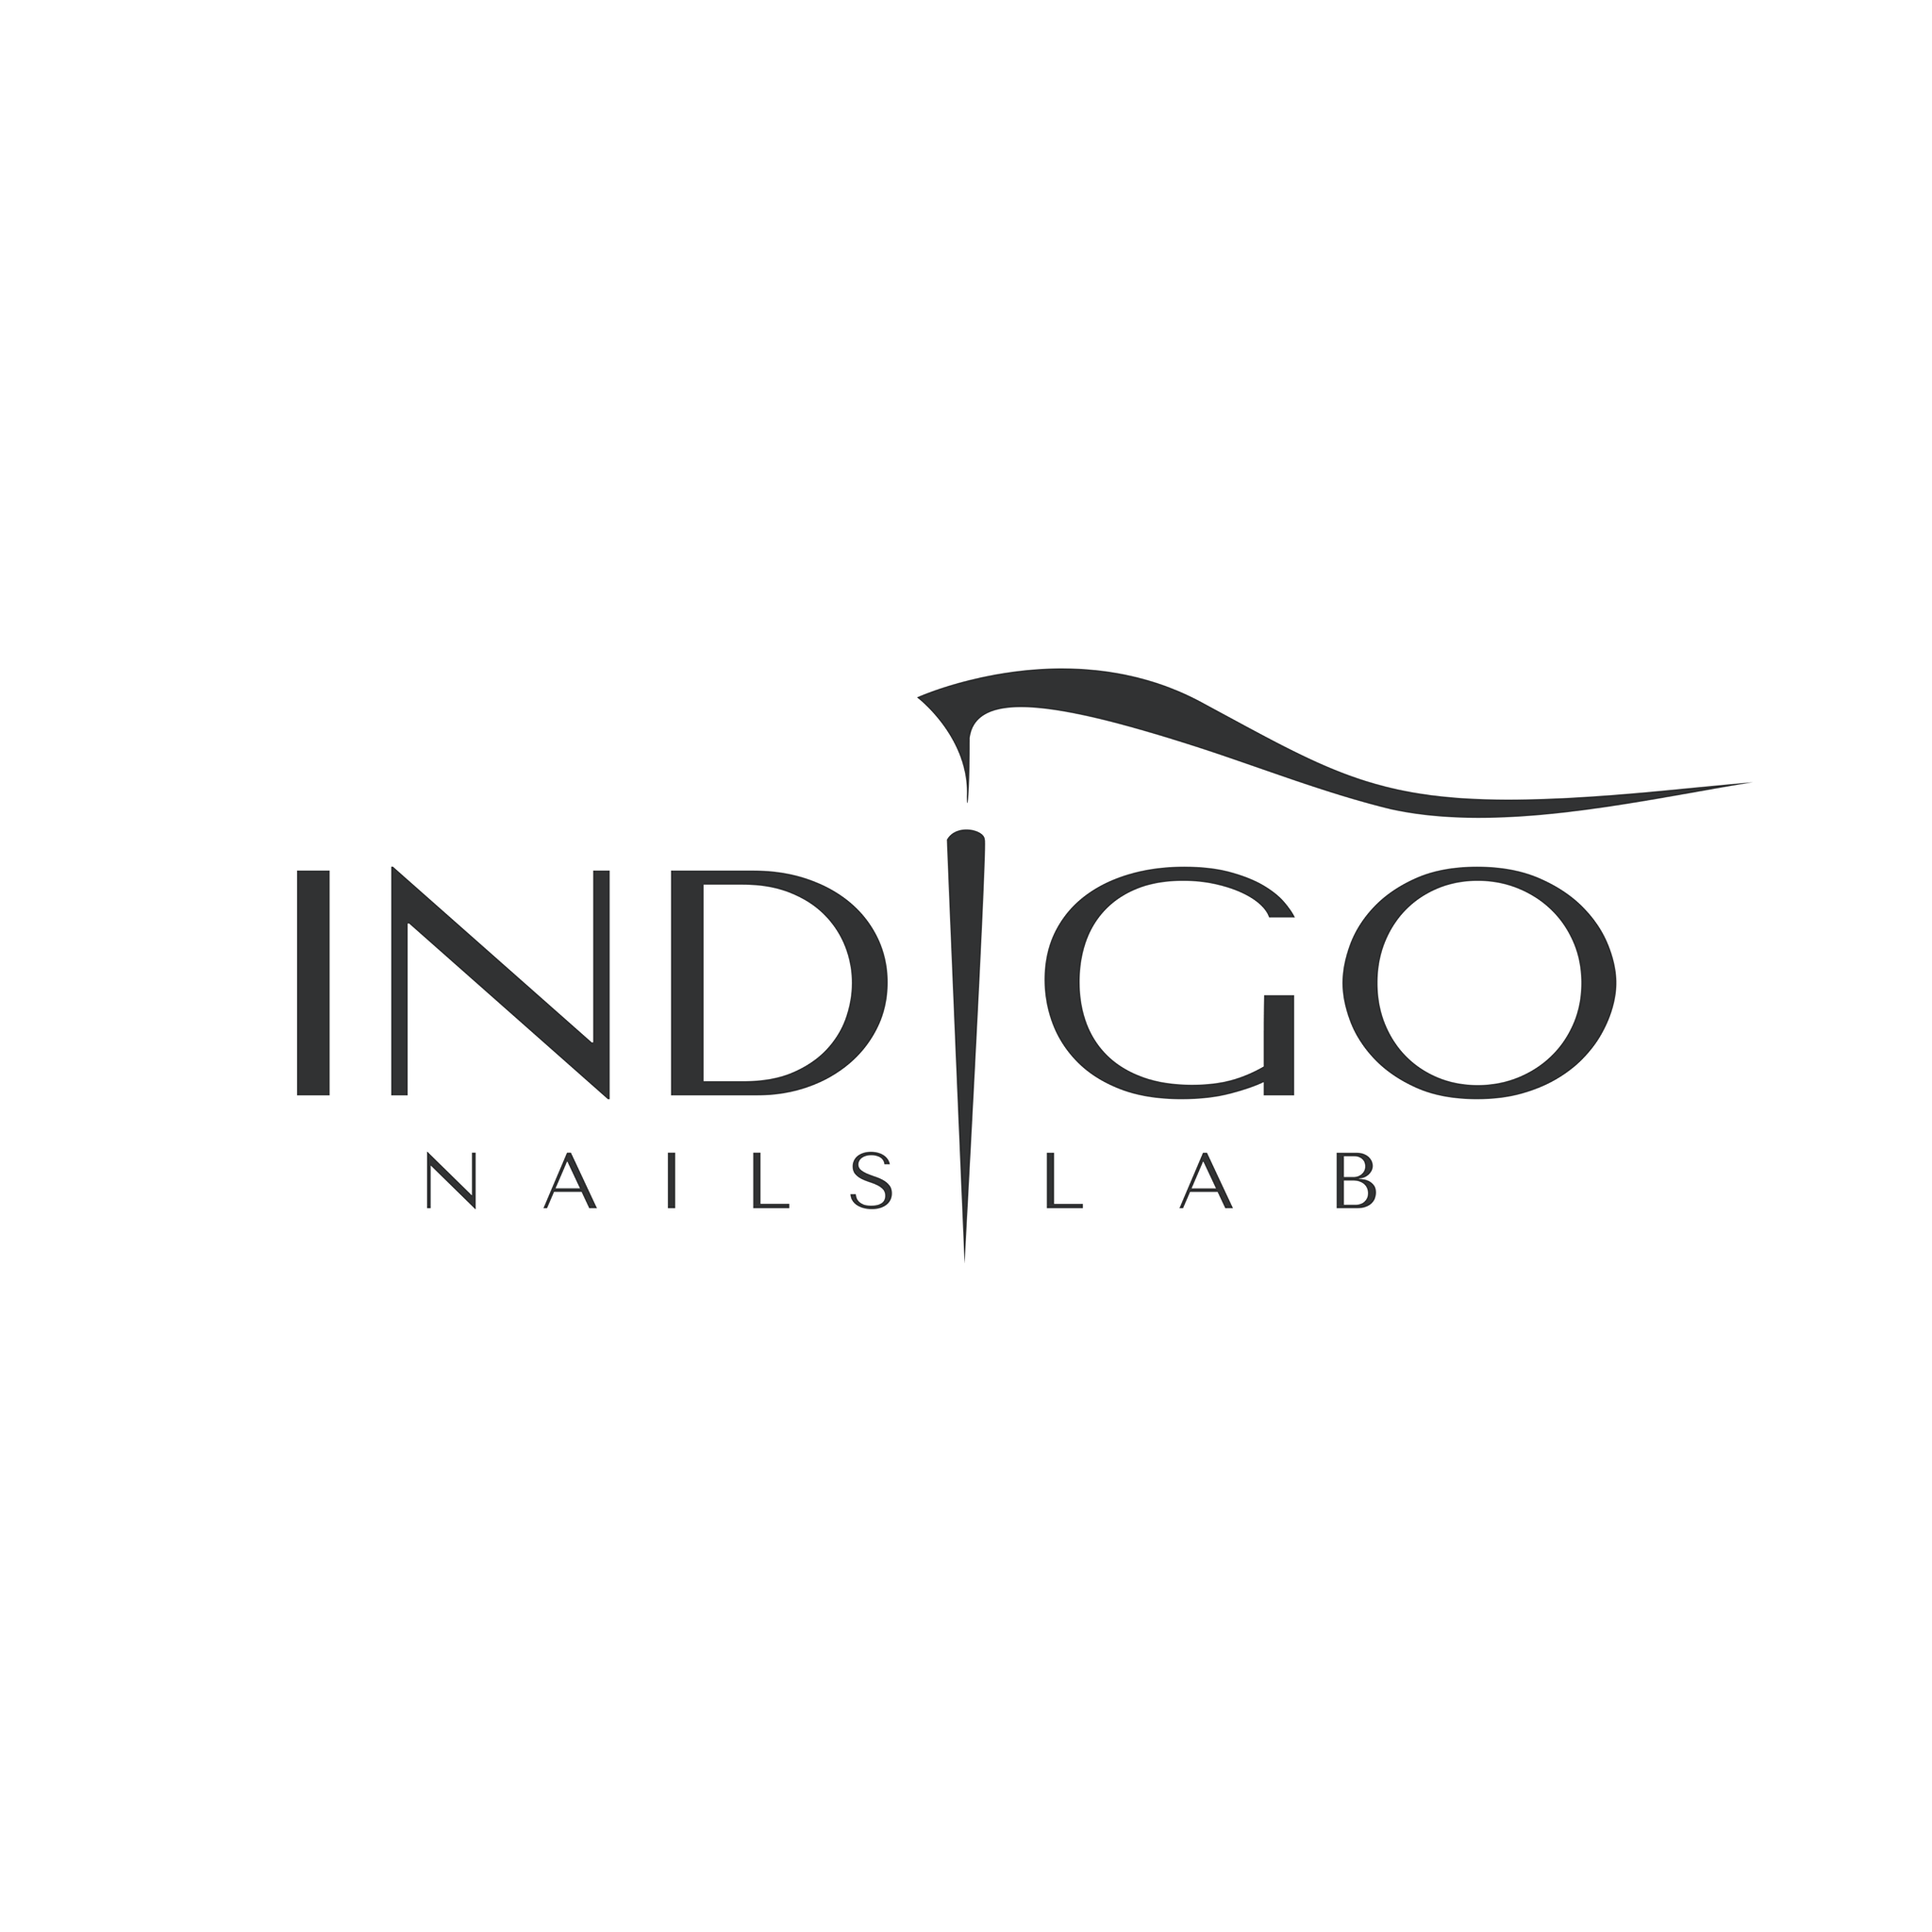 INDIGO NAILS